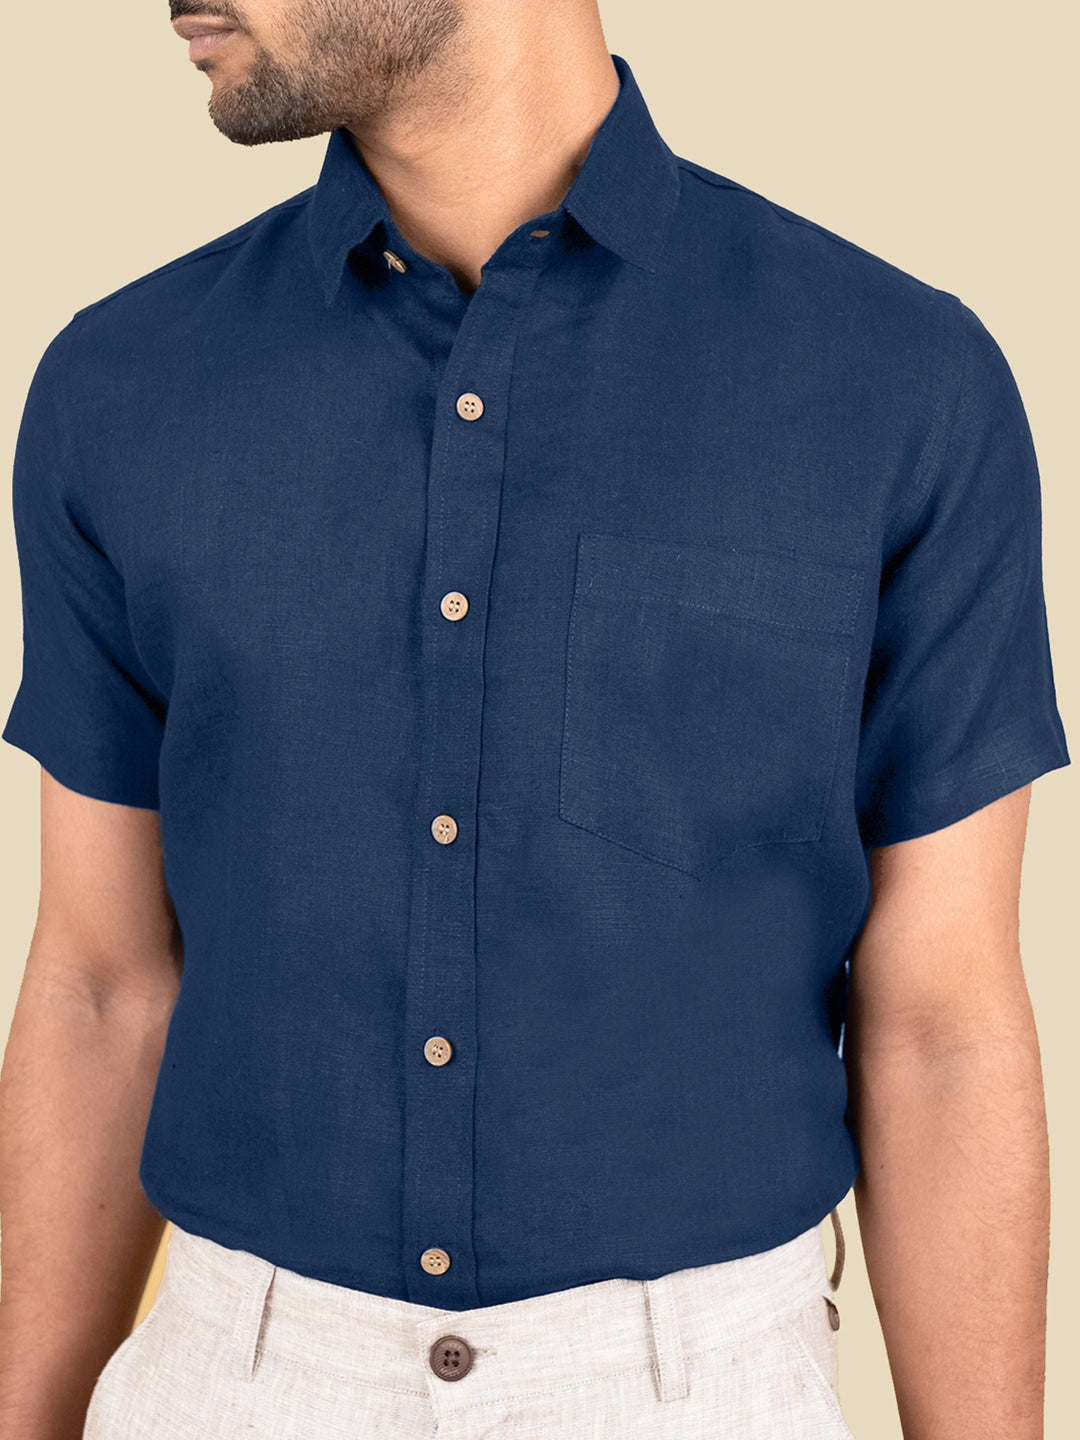 Harvey - Pure Linen Half Sleeve Shirt - Denim Blue